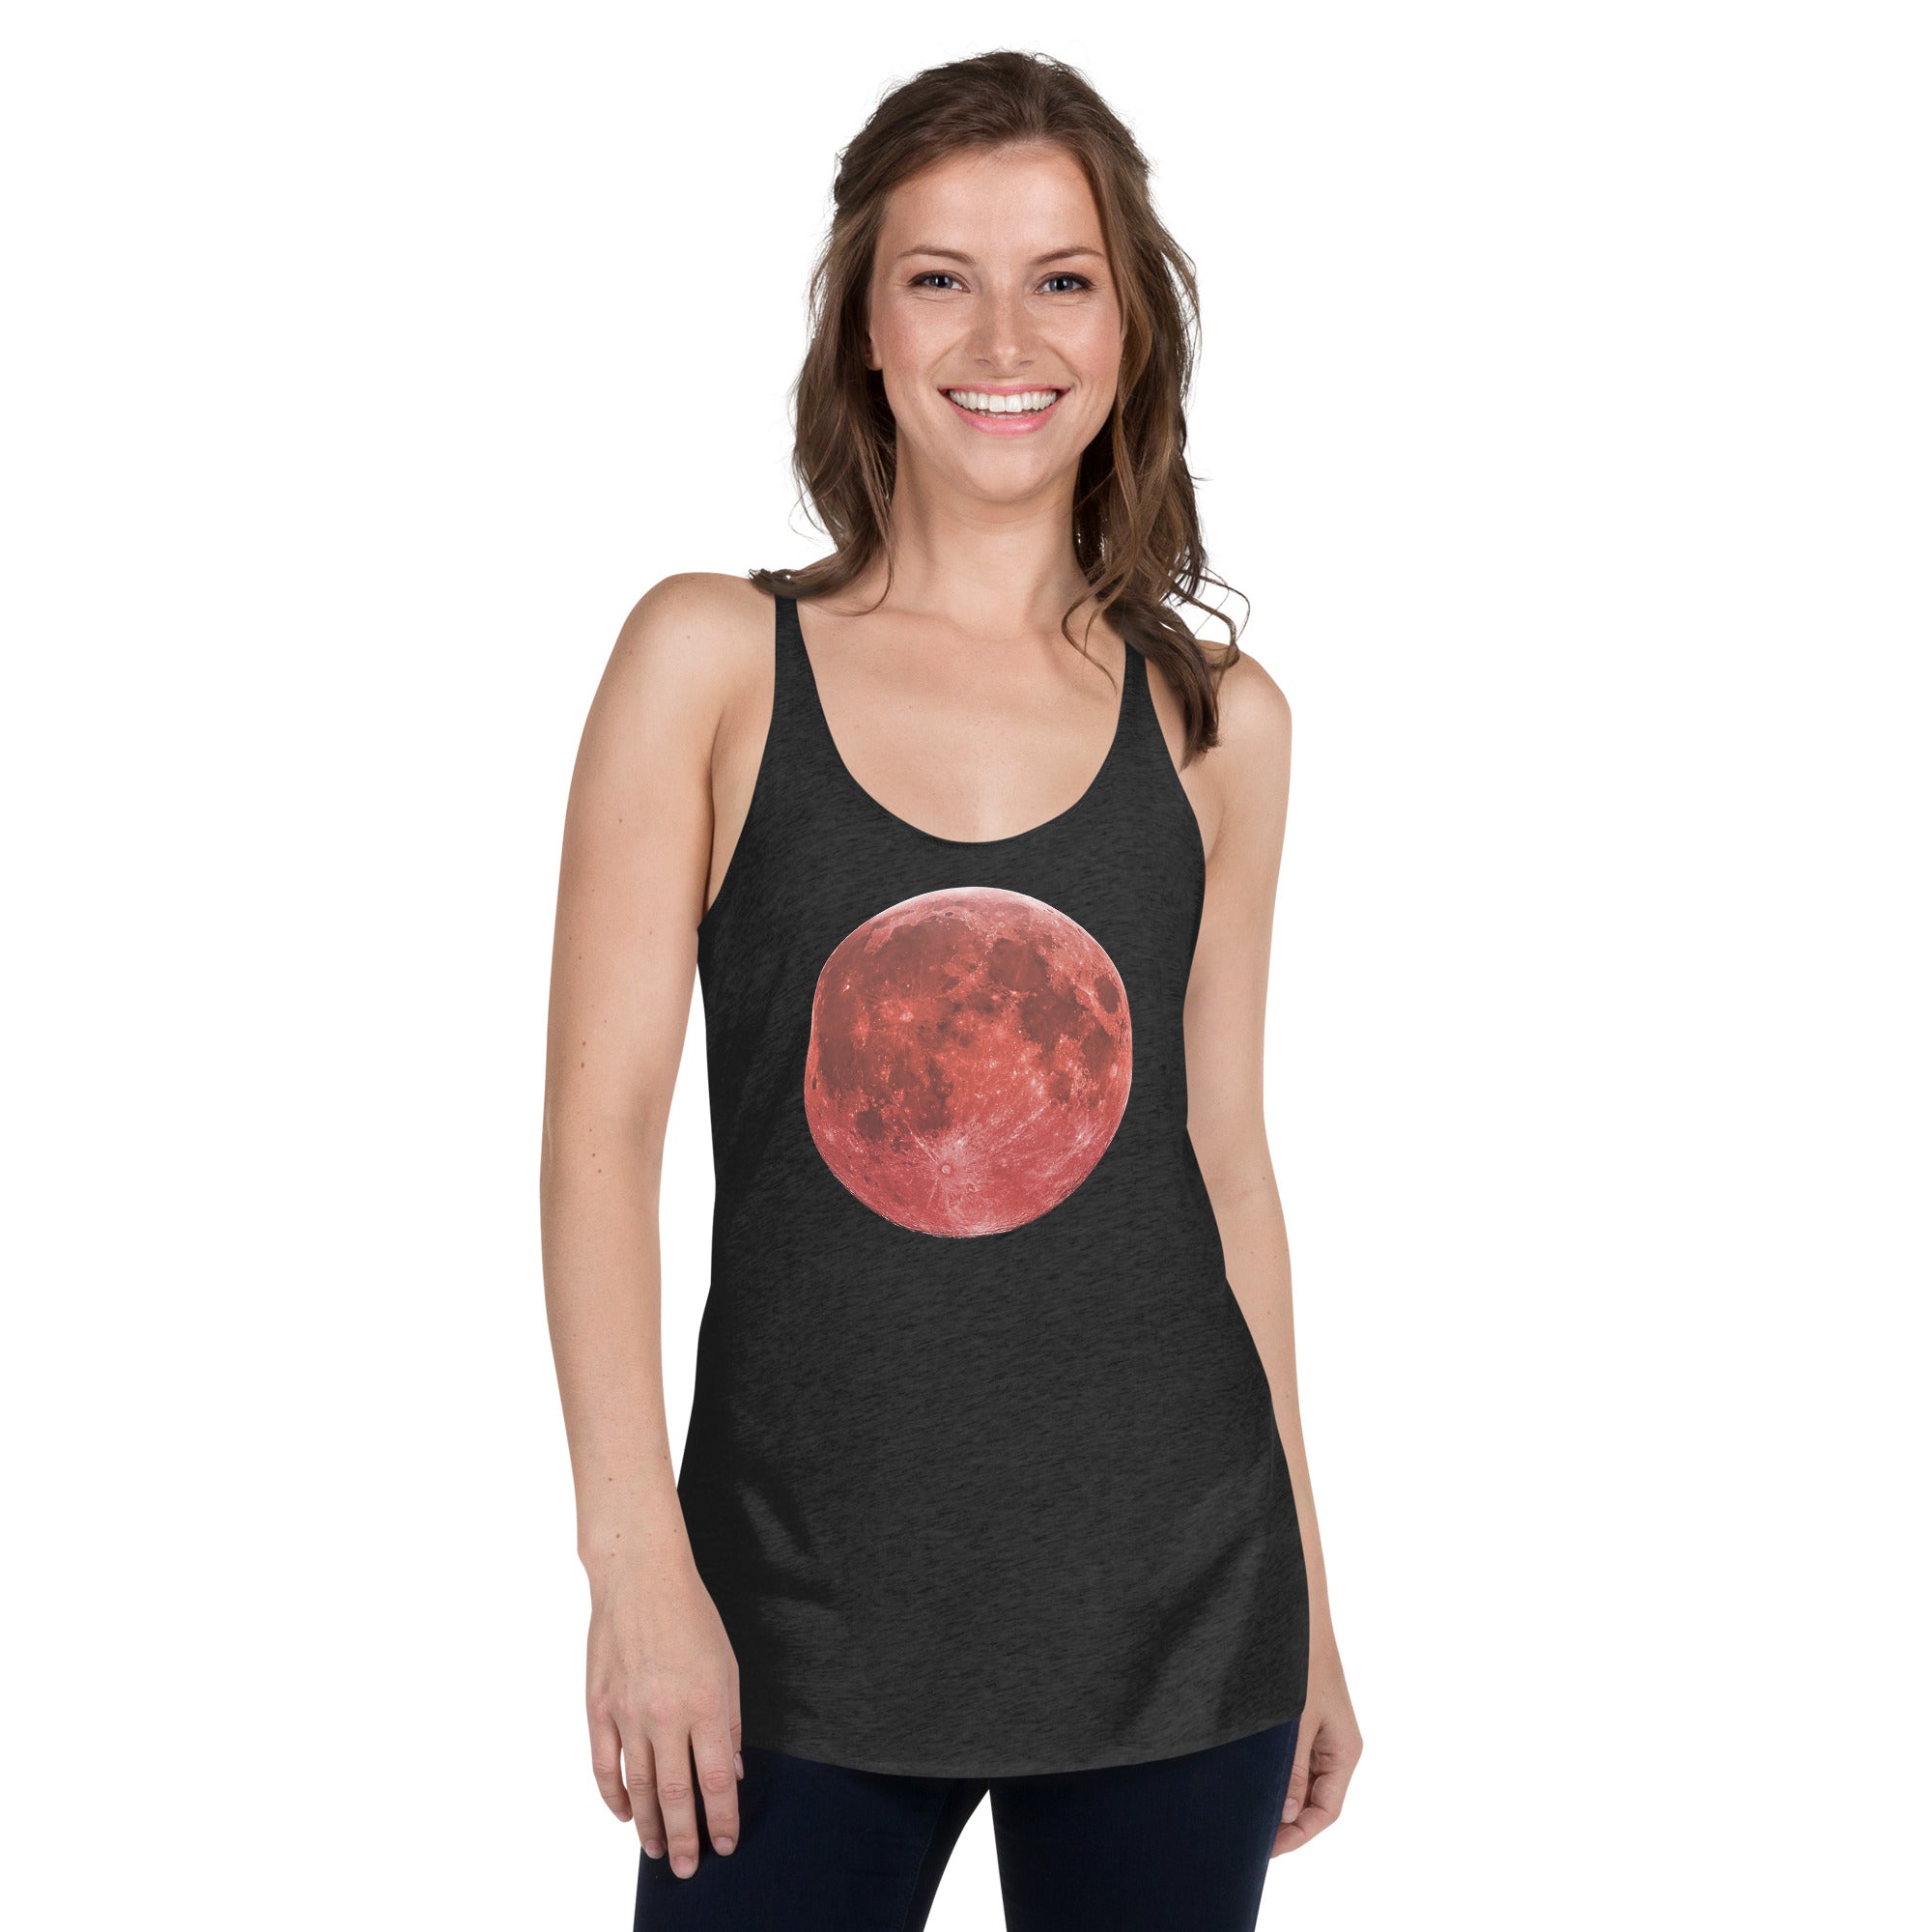 Blood Red Moon Total Lunar Eclipse Women's Racerback Tank Top Shirt - Edge of Life Designs